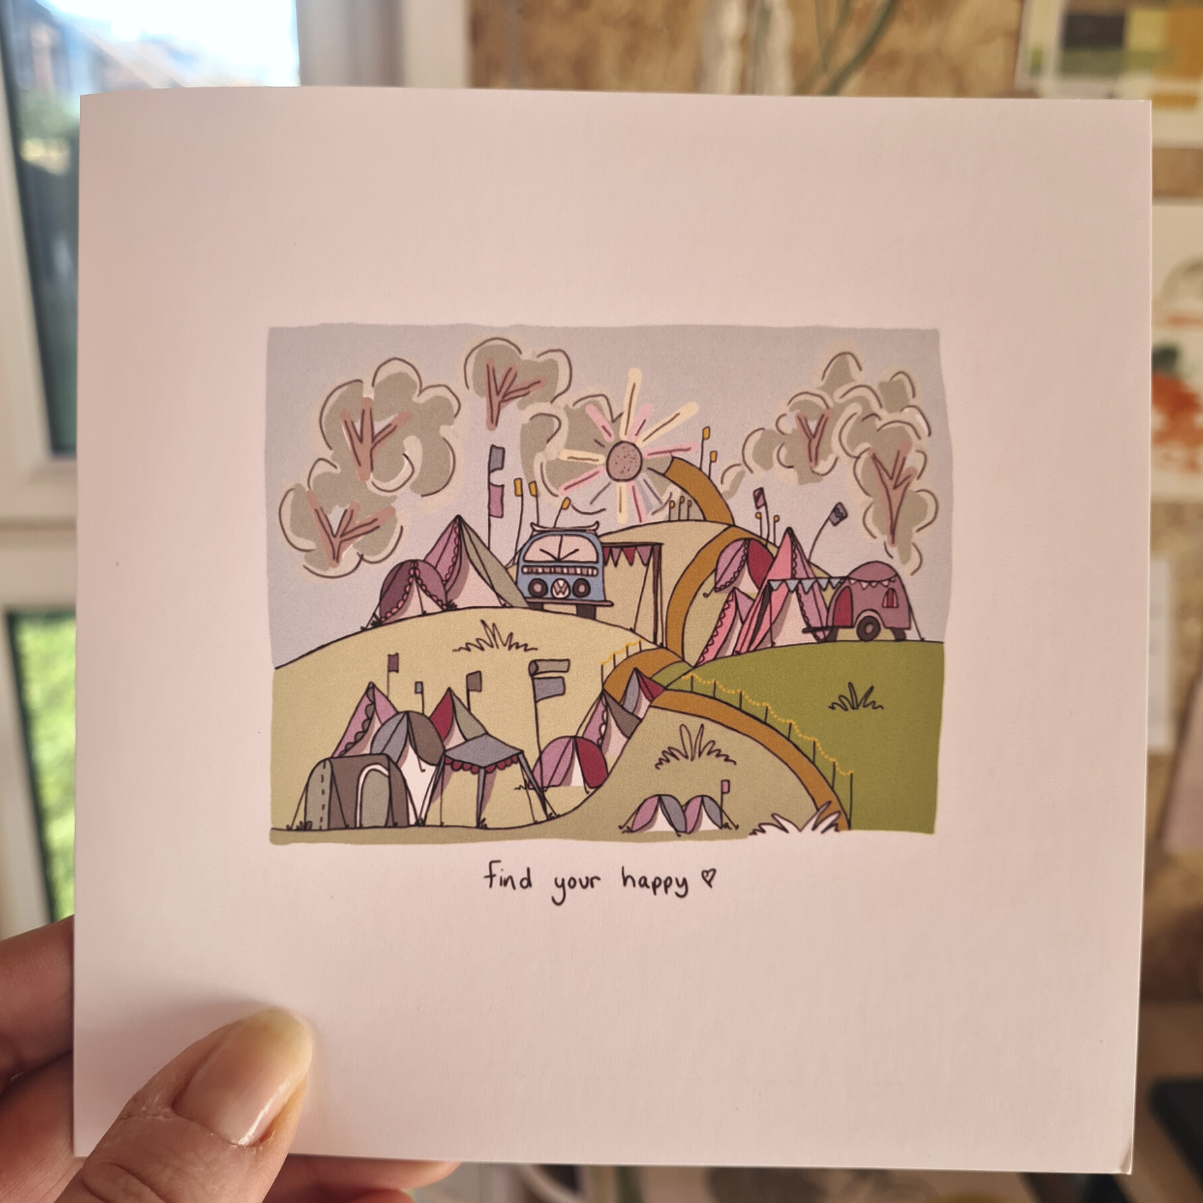 Find your happy - greeting card - original illustration 